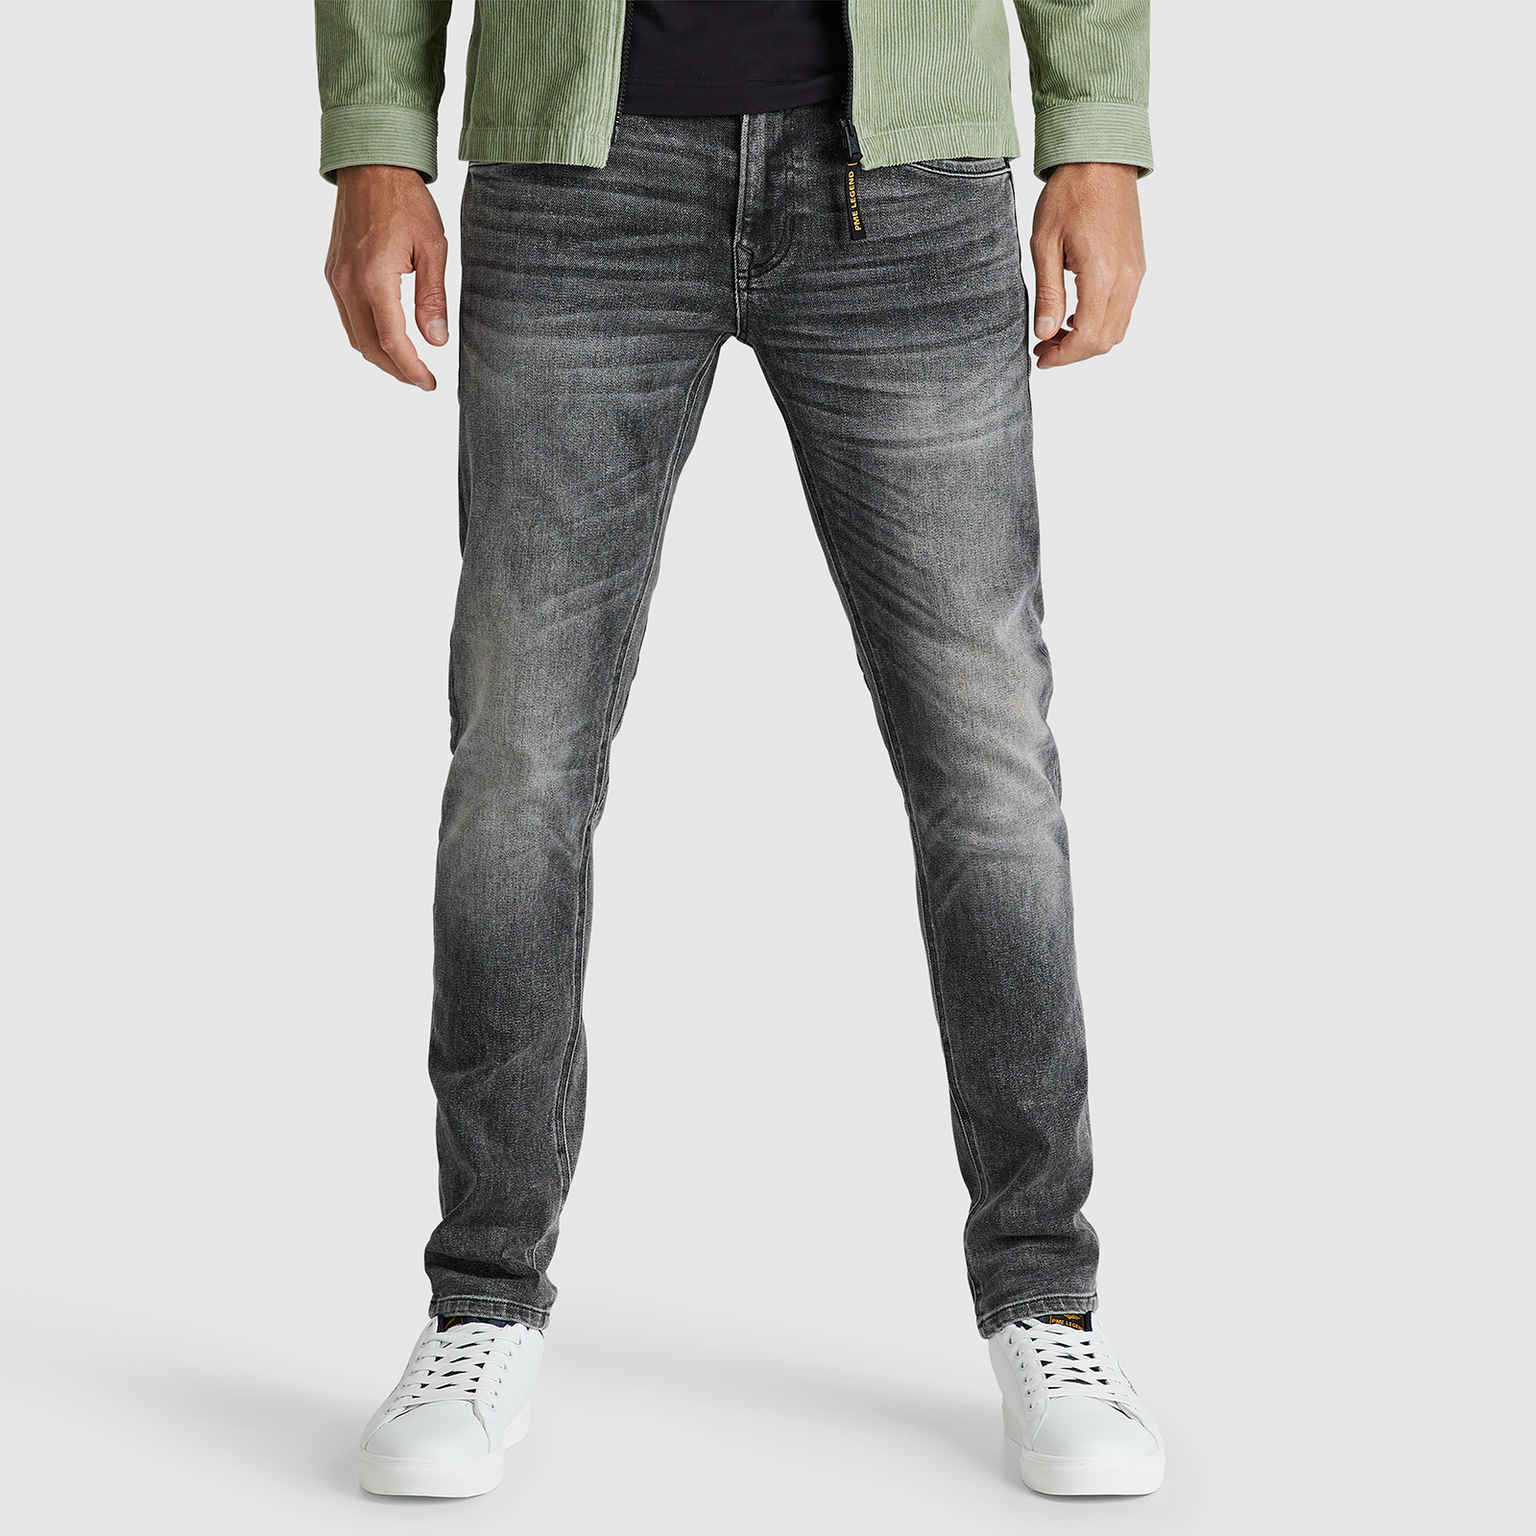 PME-Legend Jeans Slim Fit Tailwheel soft comfort grey SCG von PME Legend